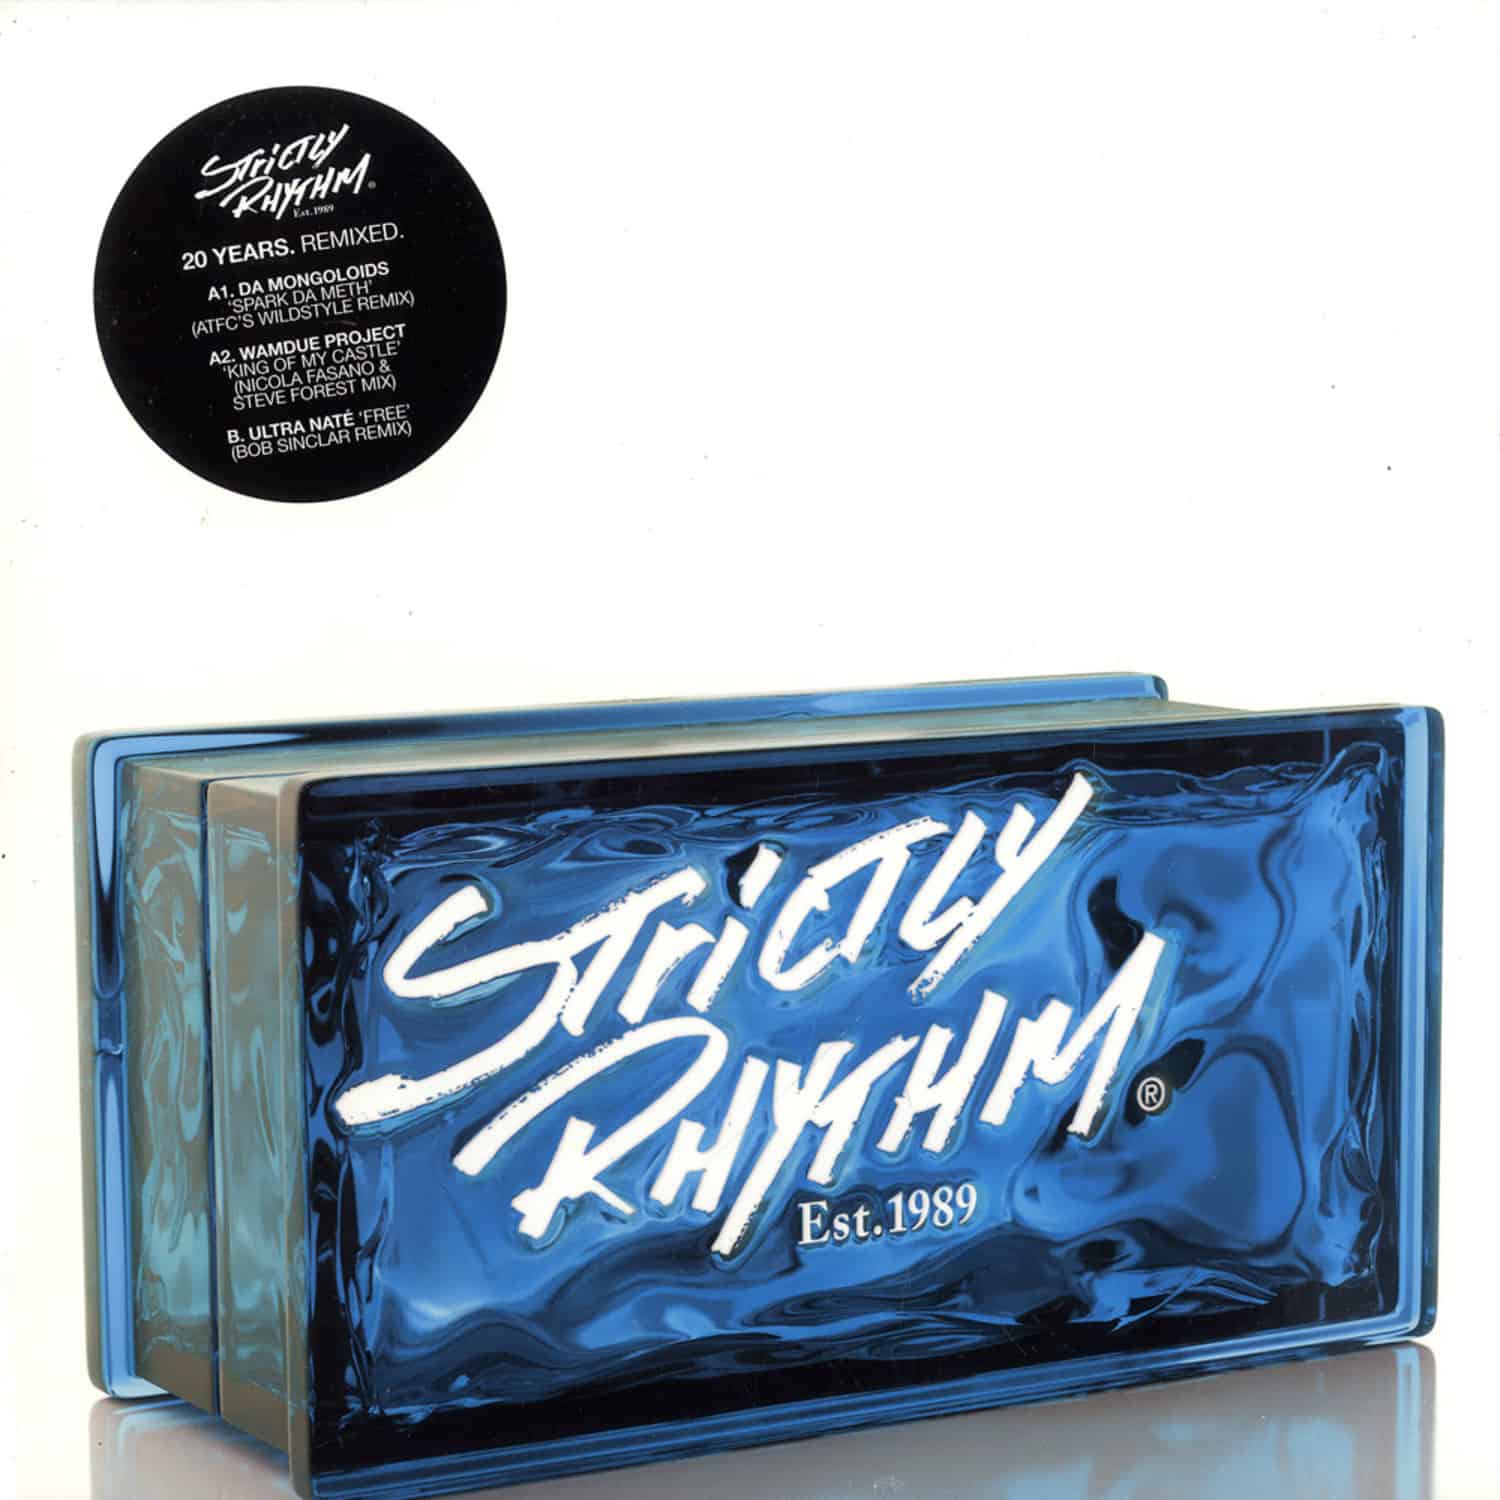 Strictly Rhythm Est. 1989 - 20 YEARS REMIXED SAMPLER 3